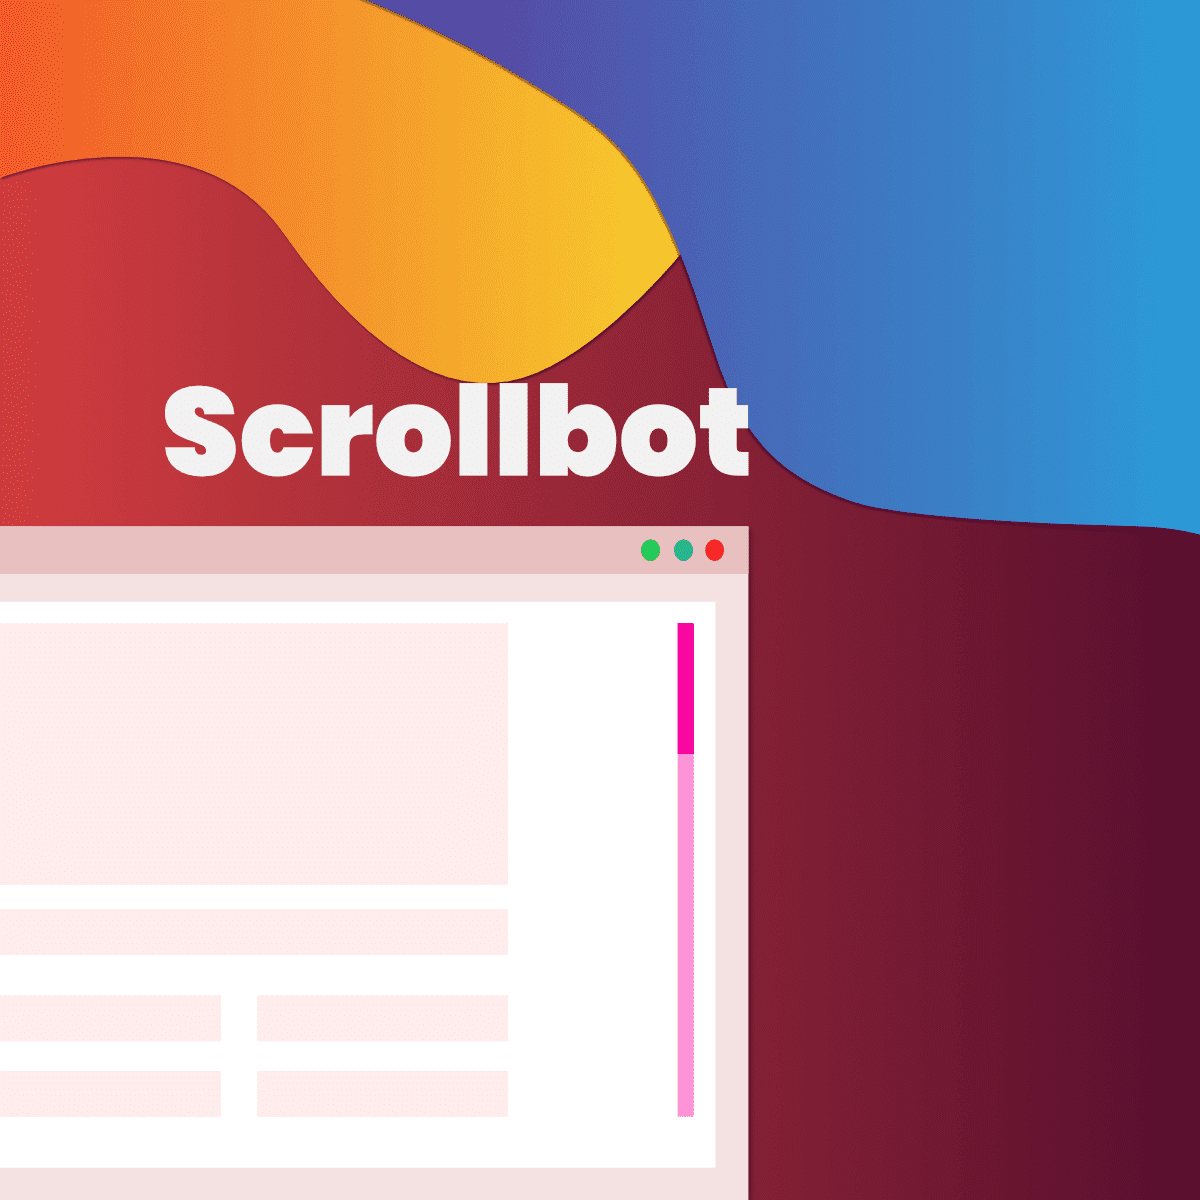 Scrollbot